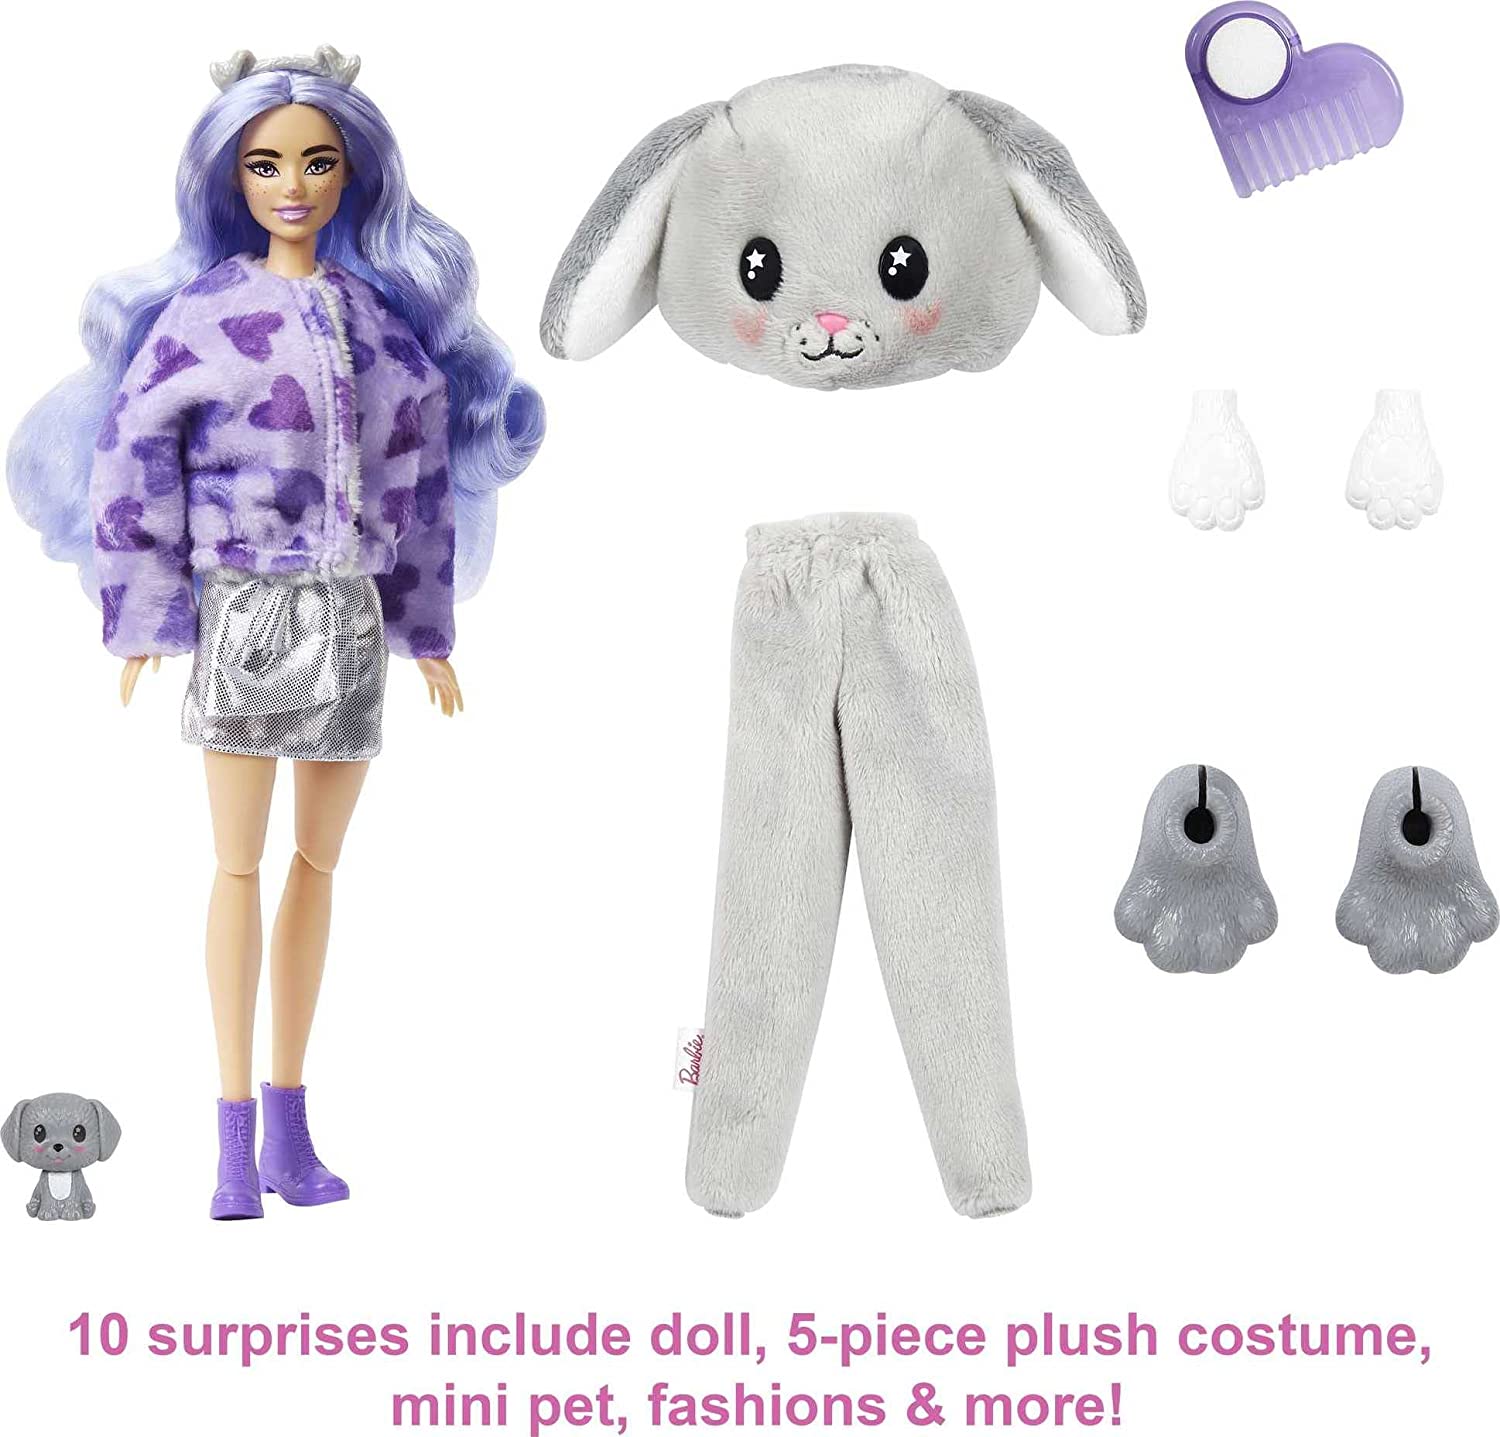 Barbie Cutie Reveal Doll with Puppy Plush Costume & 10 Surprises Including Mini Pet & Color Change,